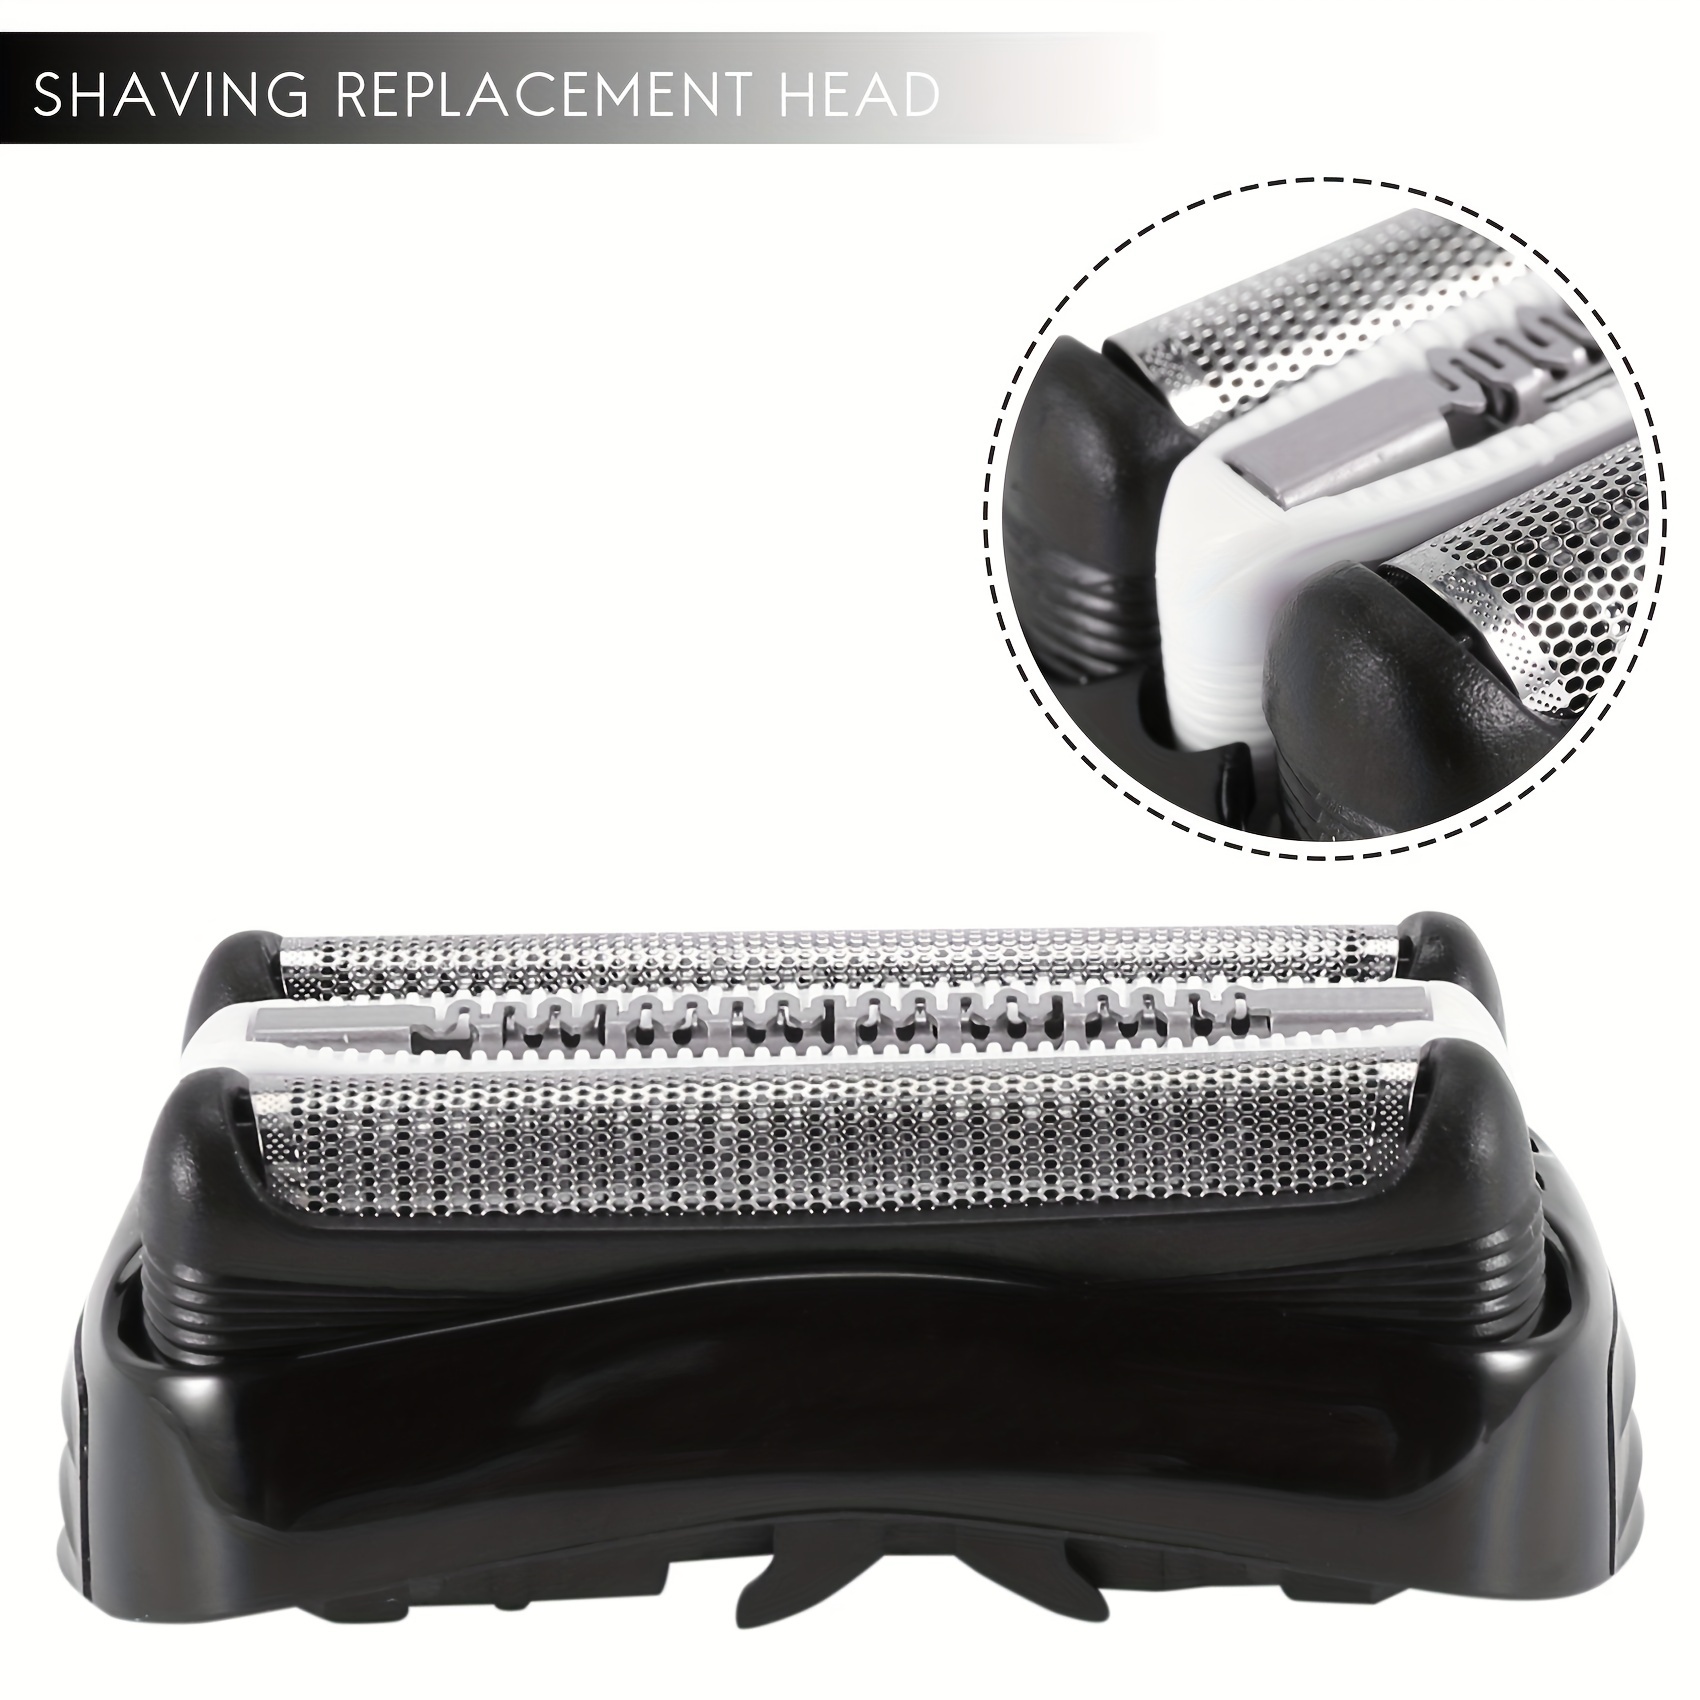 Braun Shaver Series 3,new Braun 32b Replacement Head, Enhance Your